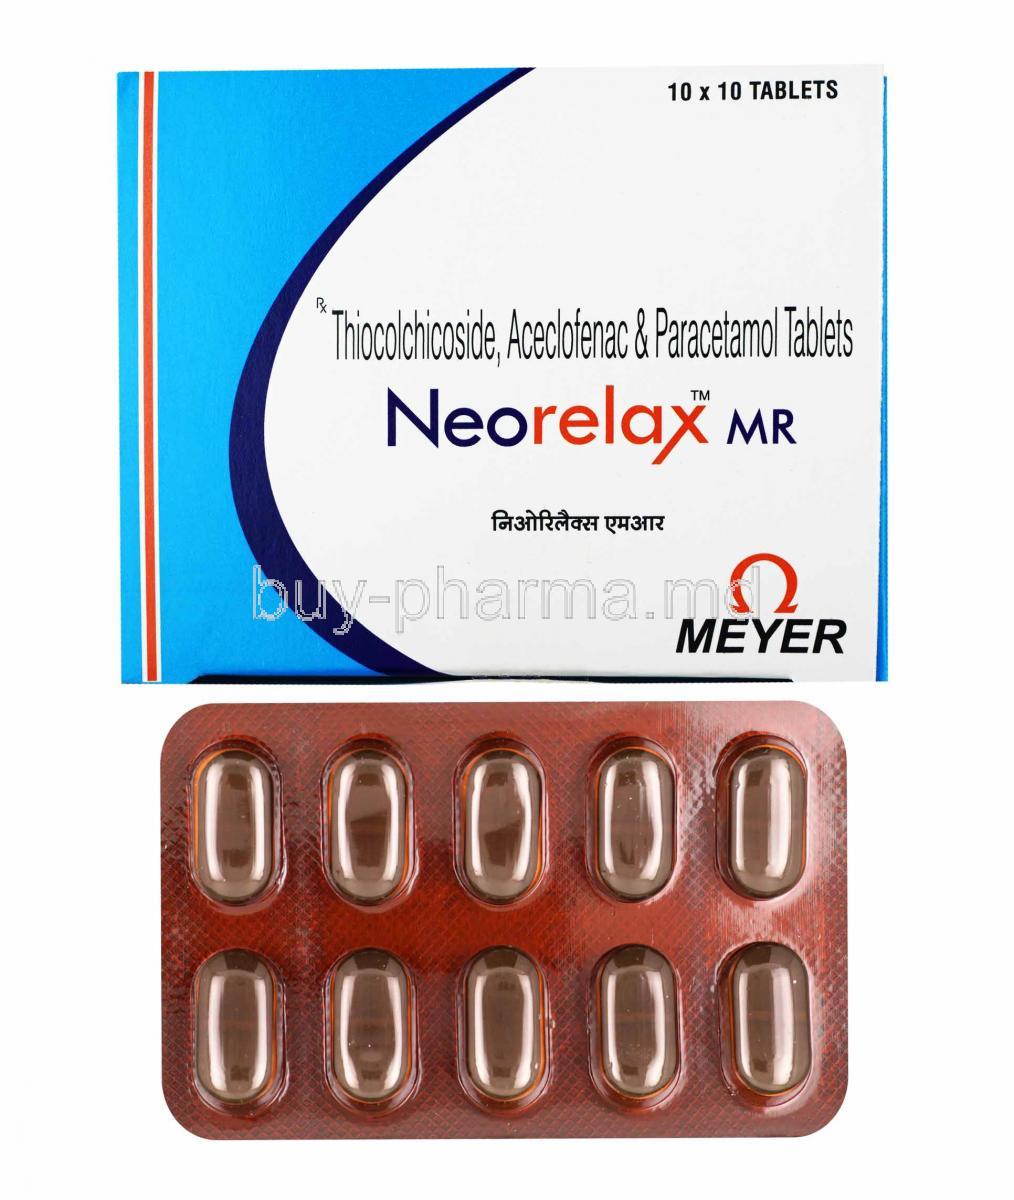 Neorelax MR, Thiocolchicoside 4mg, Aceclofenac 100mg and Paracetamol 325mg box and tablets